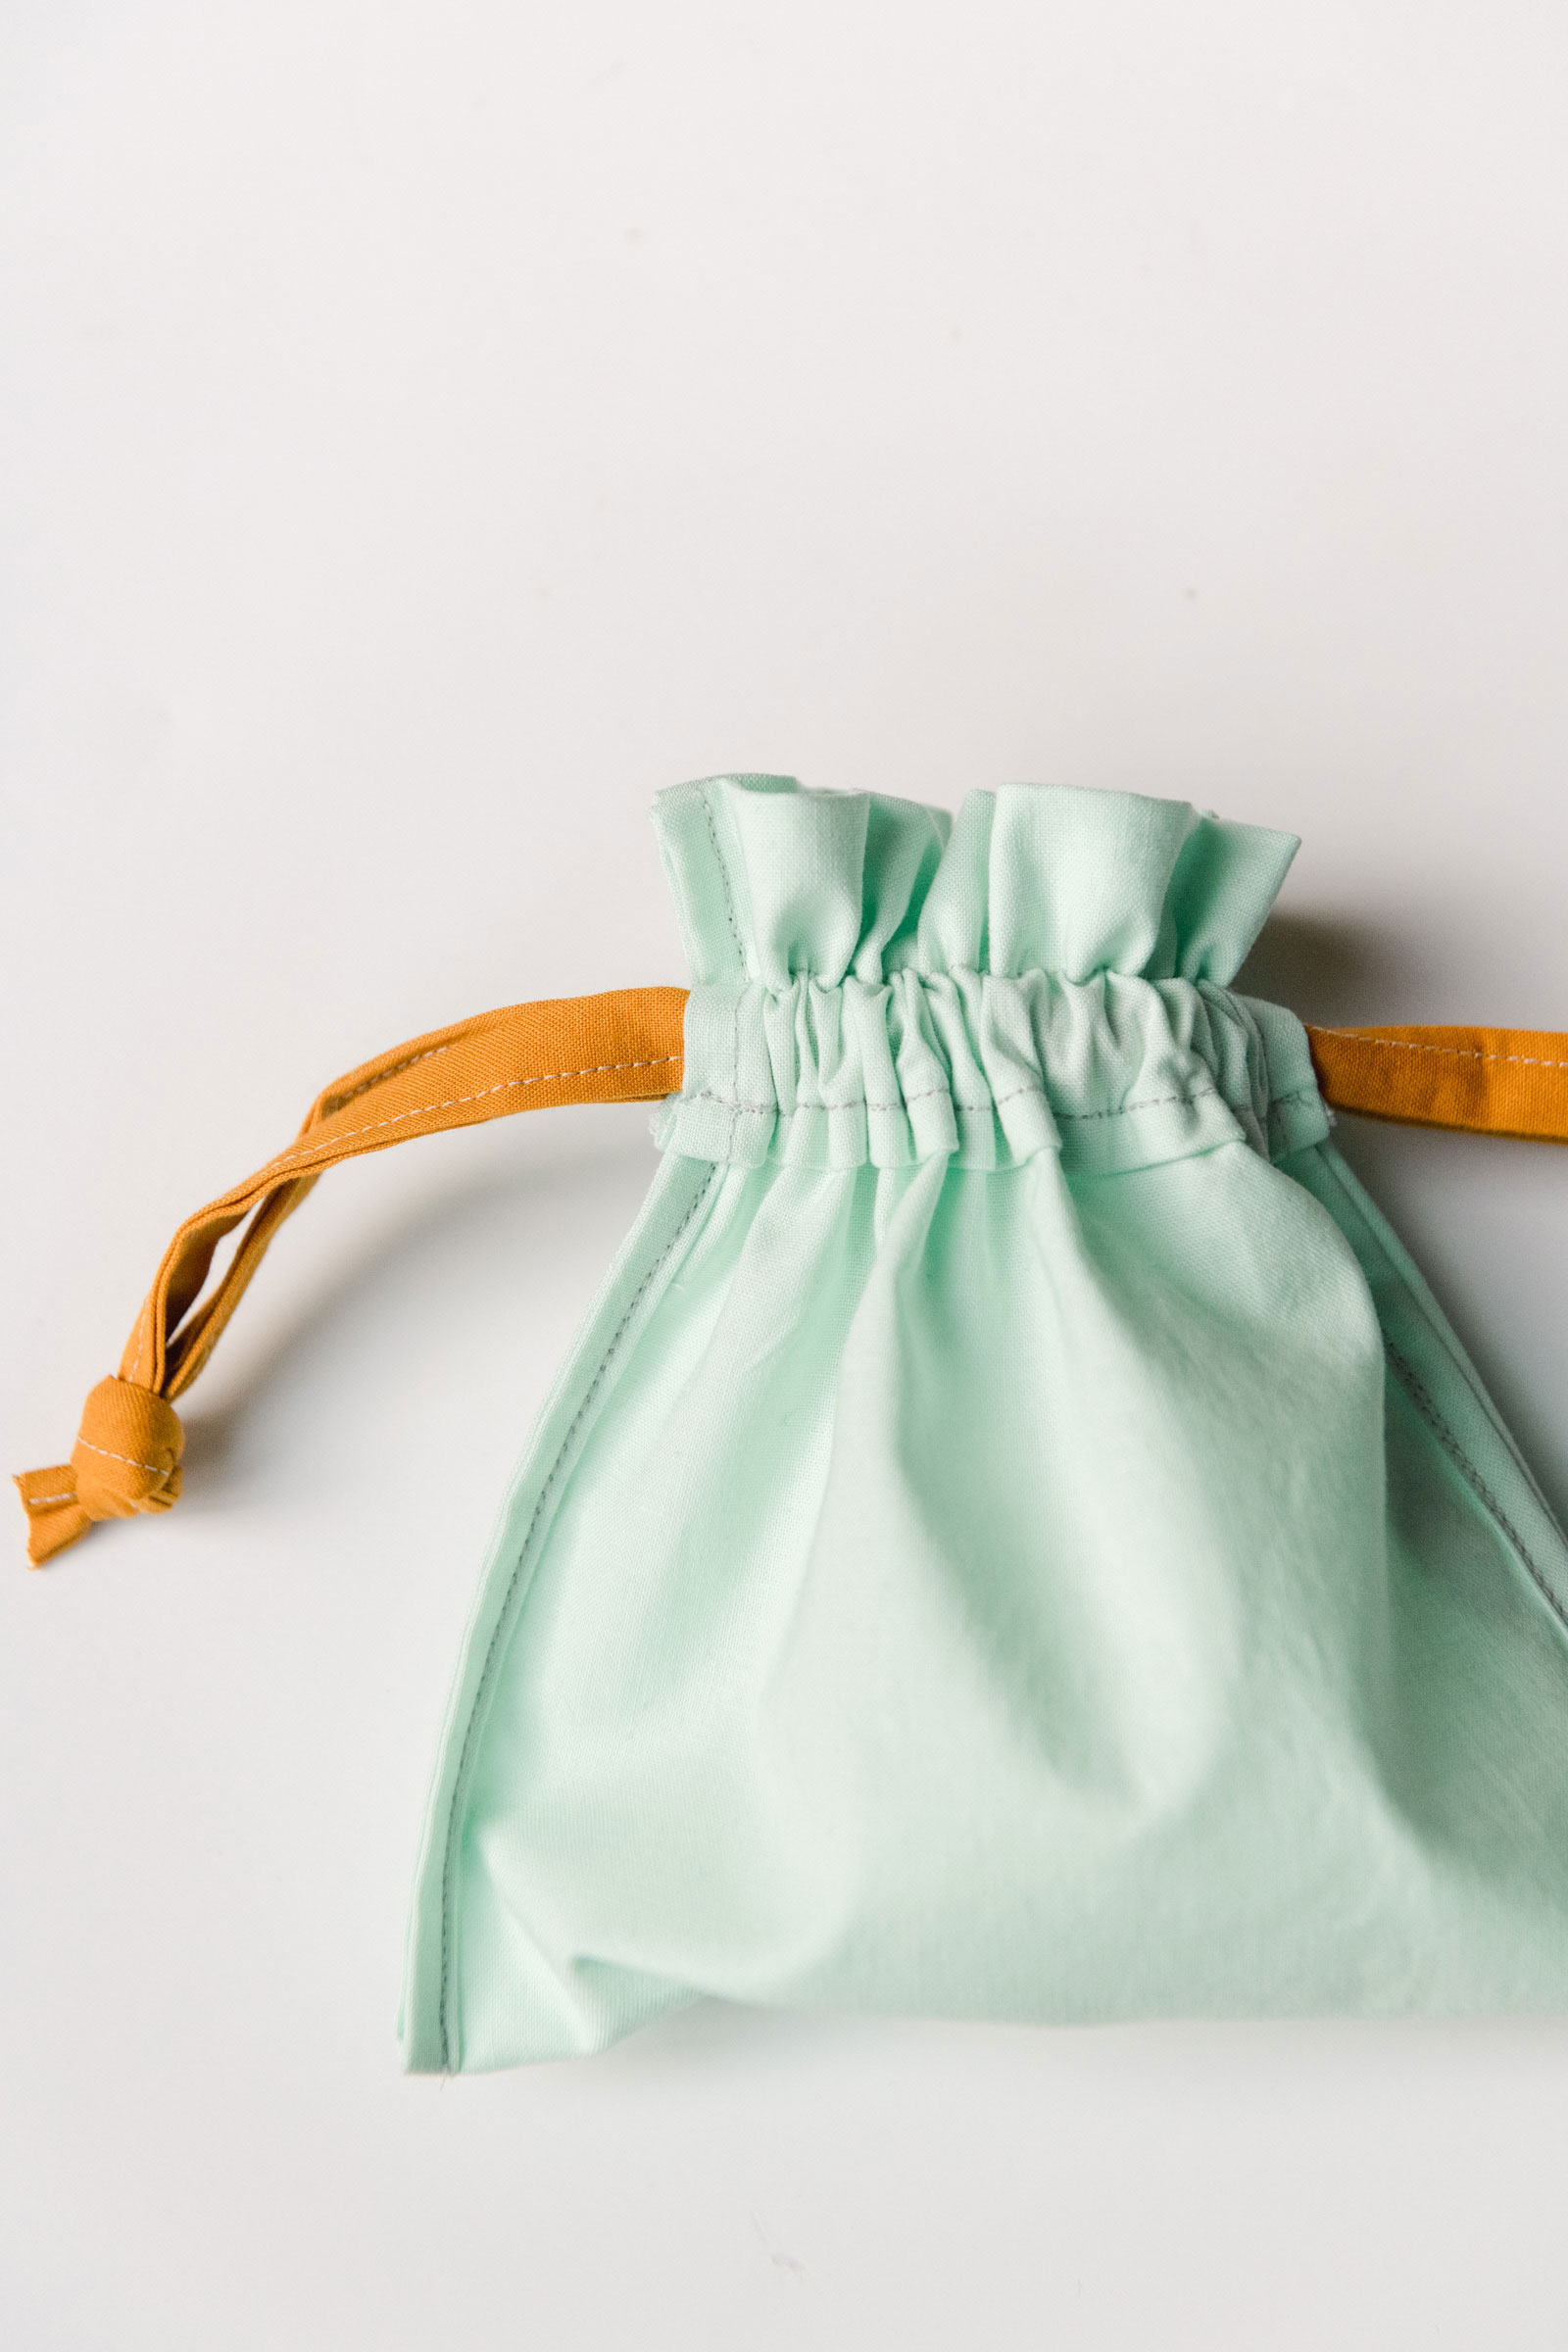 Sewn a simple drawstring bag!